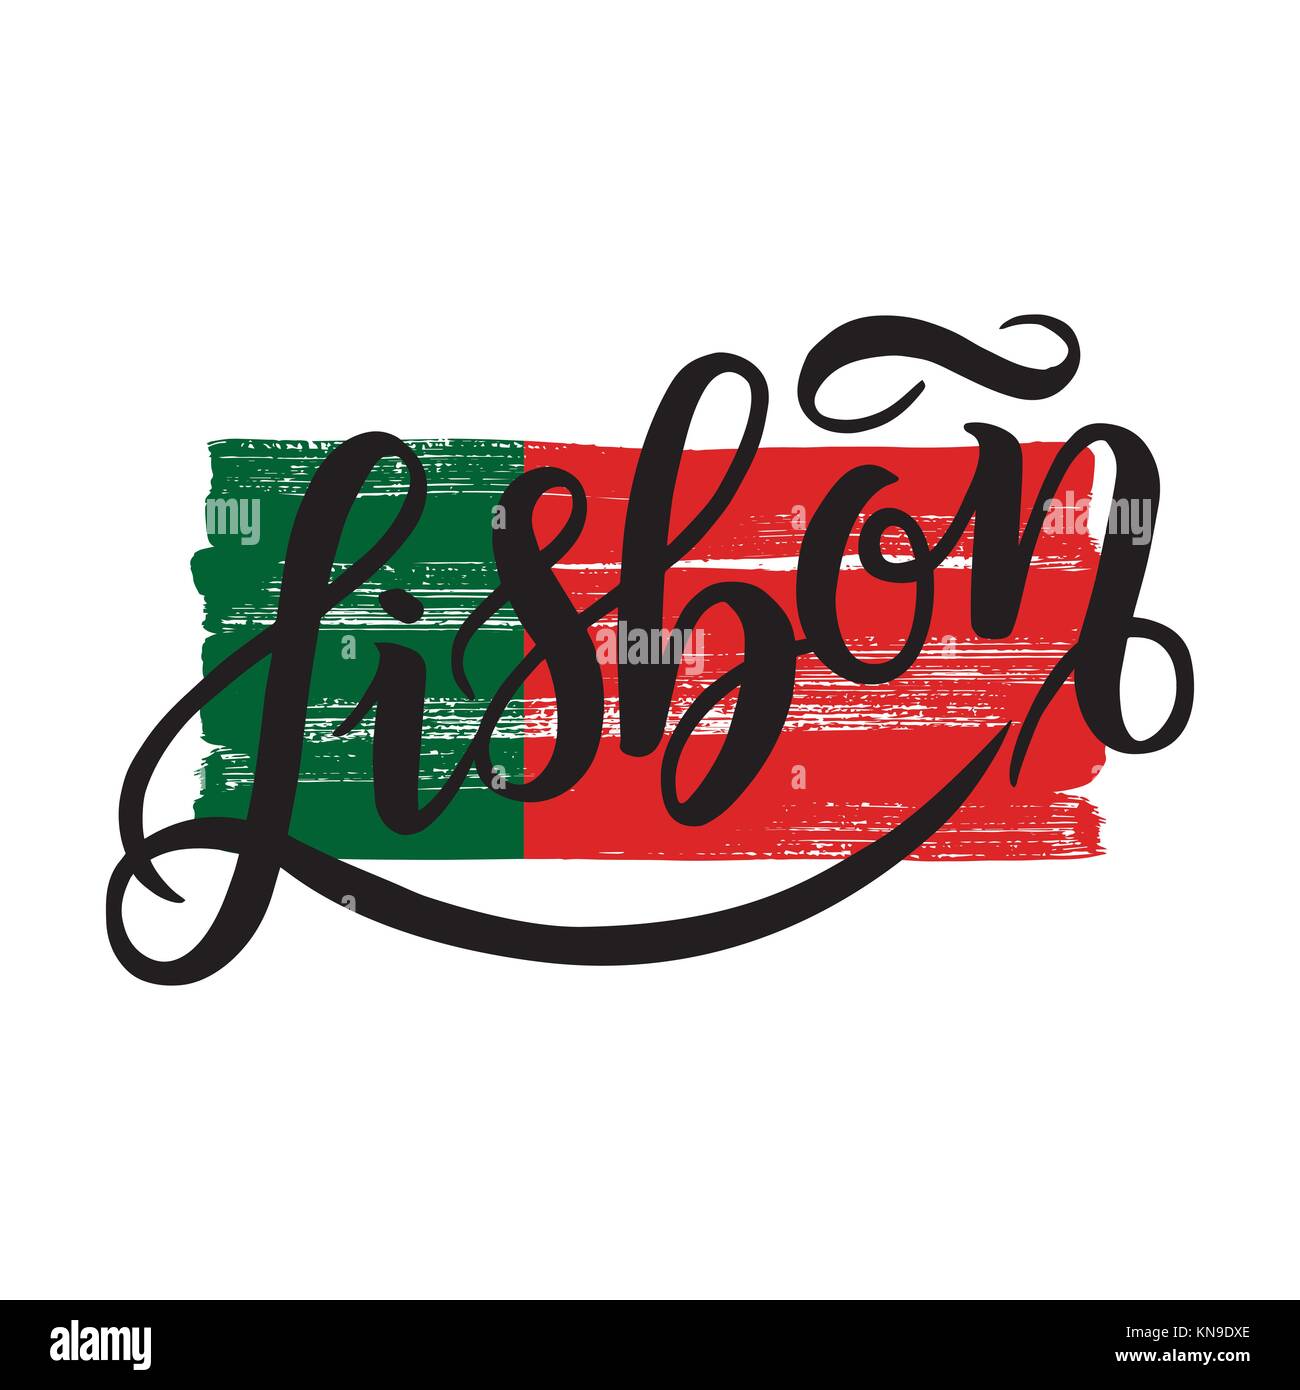 Lissabon Schriftzug mit National Flagge, Portugal. Stadt logo isoliert auf Weiss. black label oder Firmenschriftzug. Toll für T-Shirts, Postkarten oder Poster. Stock Vektor